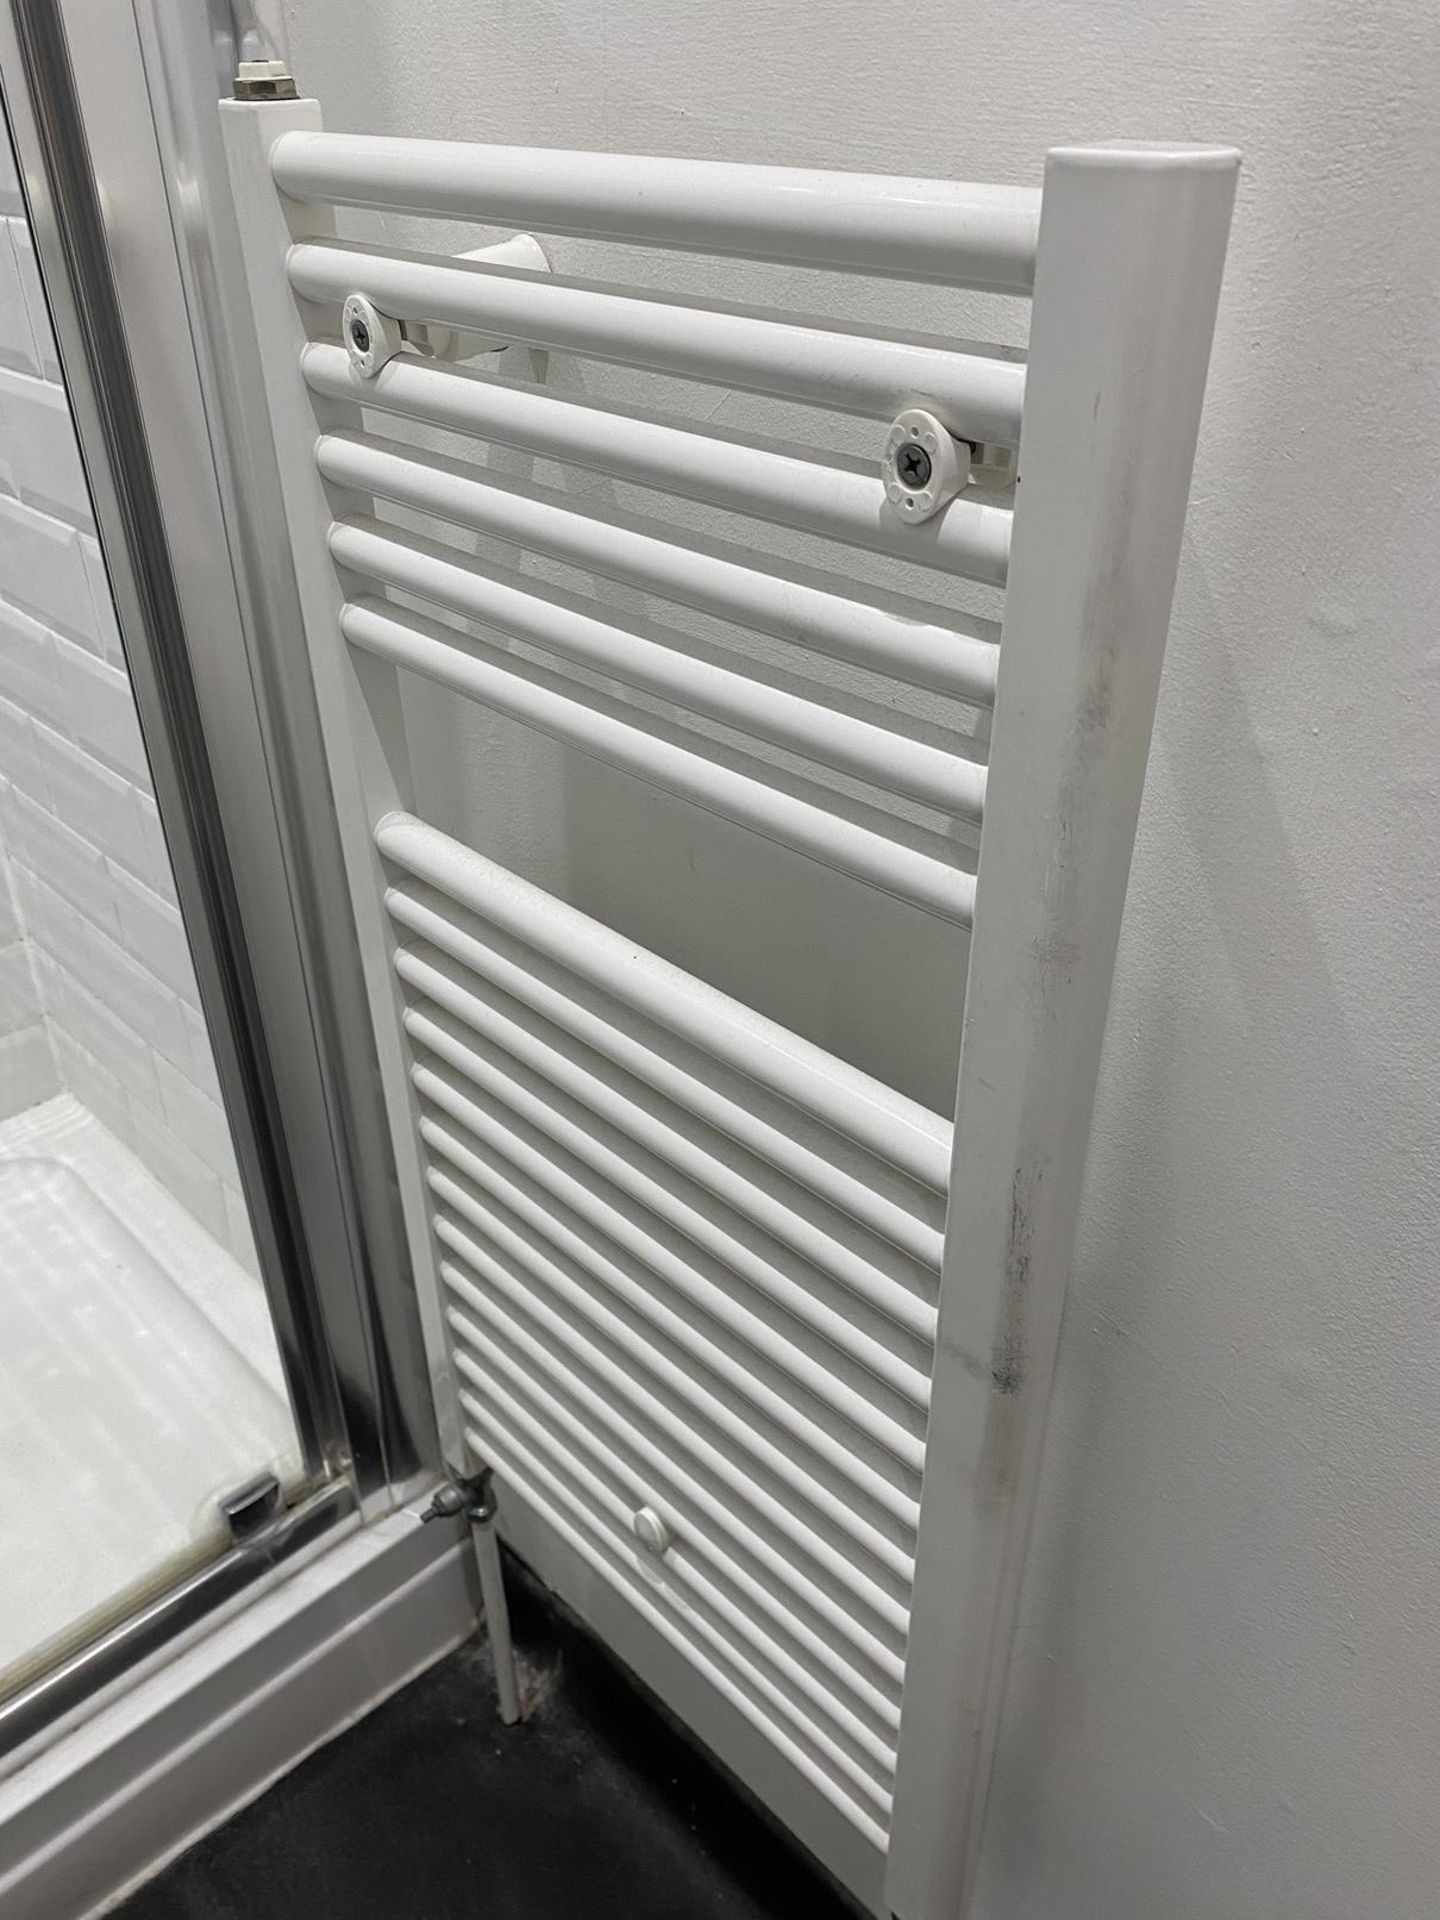 Bathroom white towel heater radiator. - Image 2 of 3